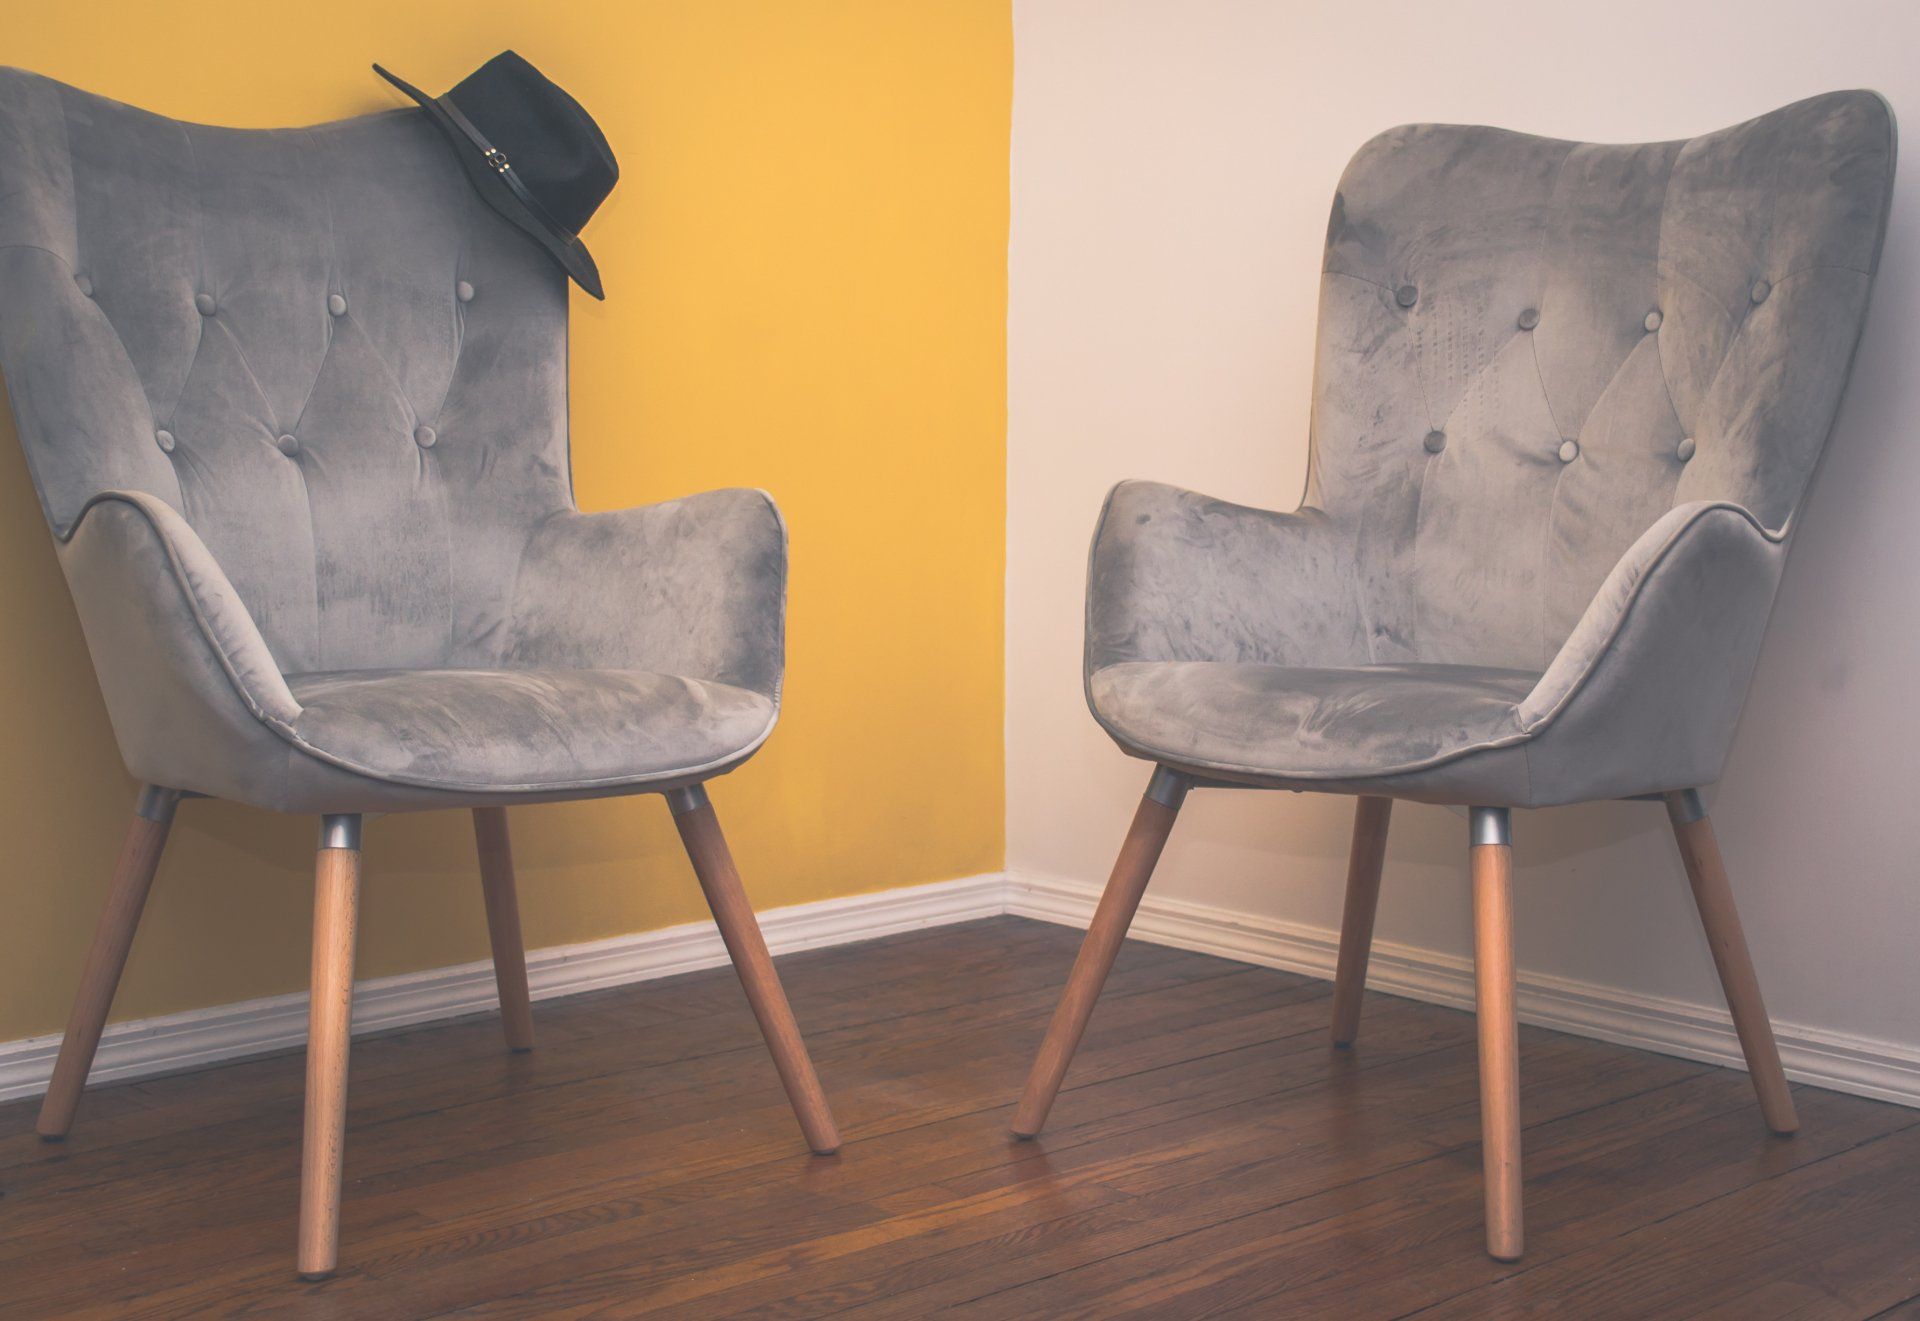 Two refurbished chairs